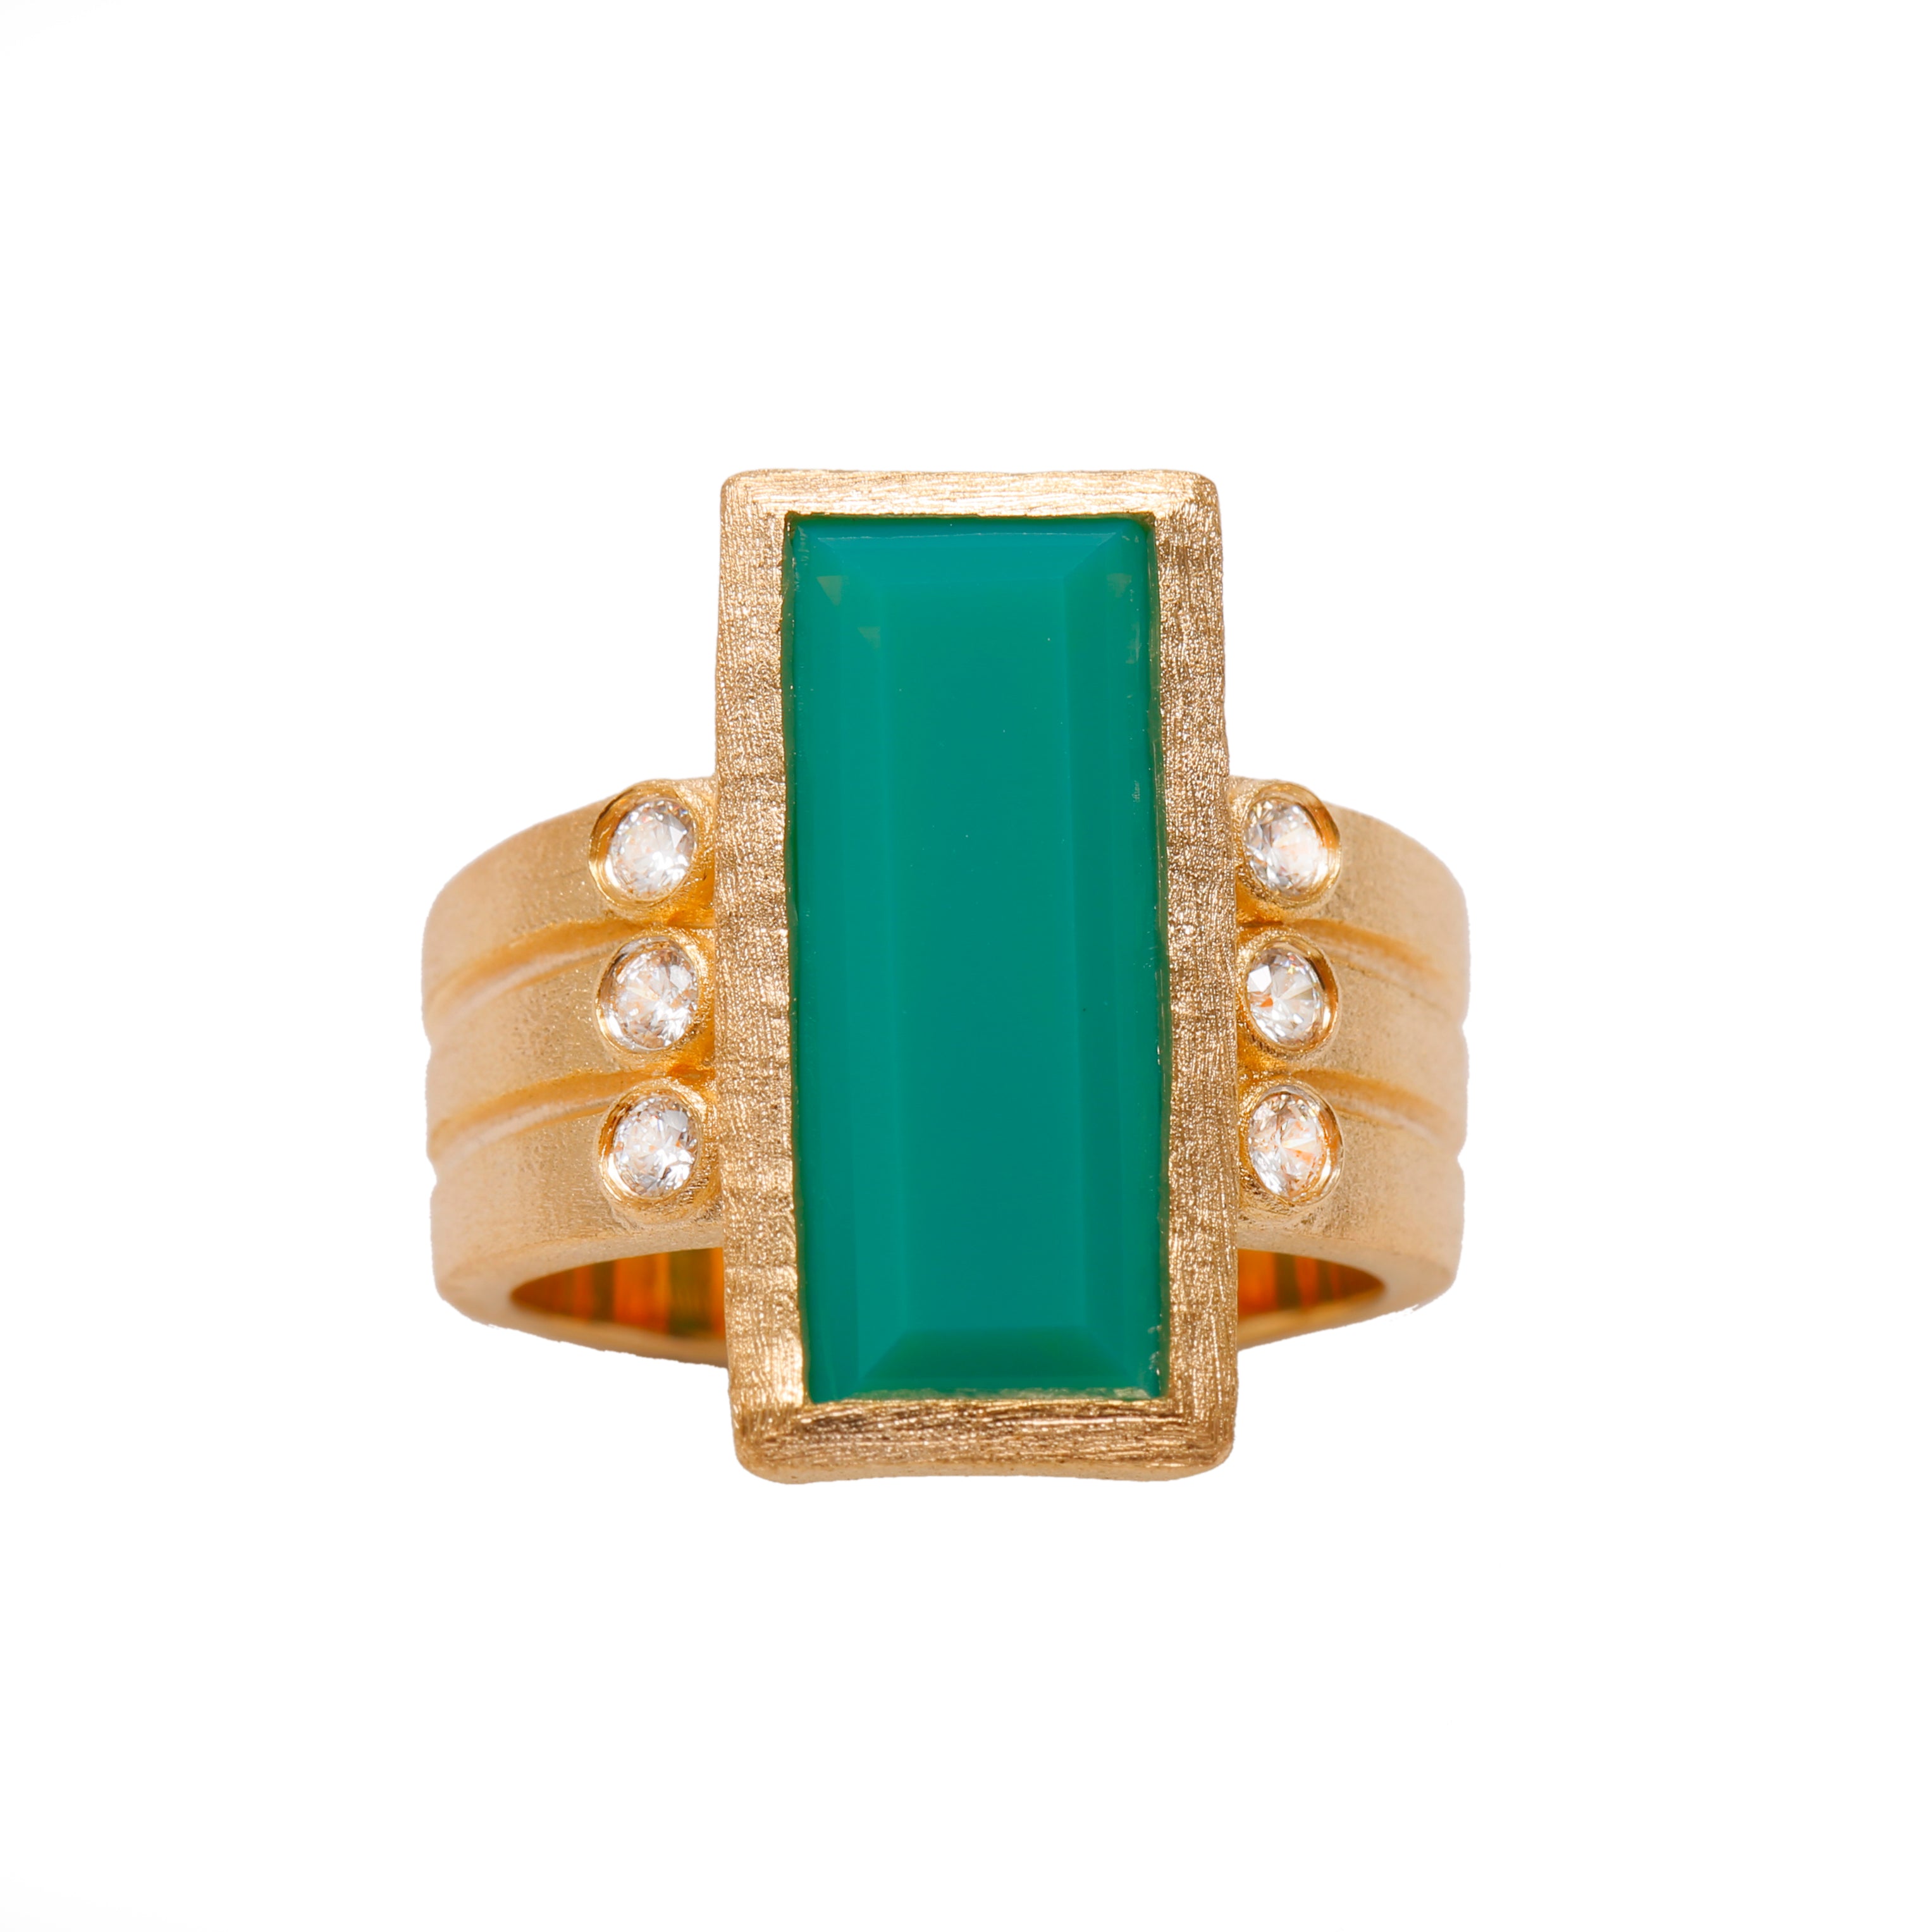 The Queen Statement Ring Vermeil Gold With Green Gemstone